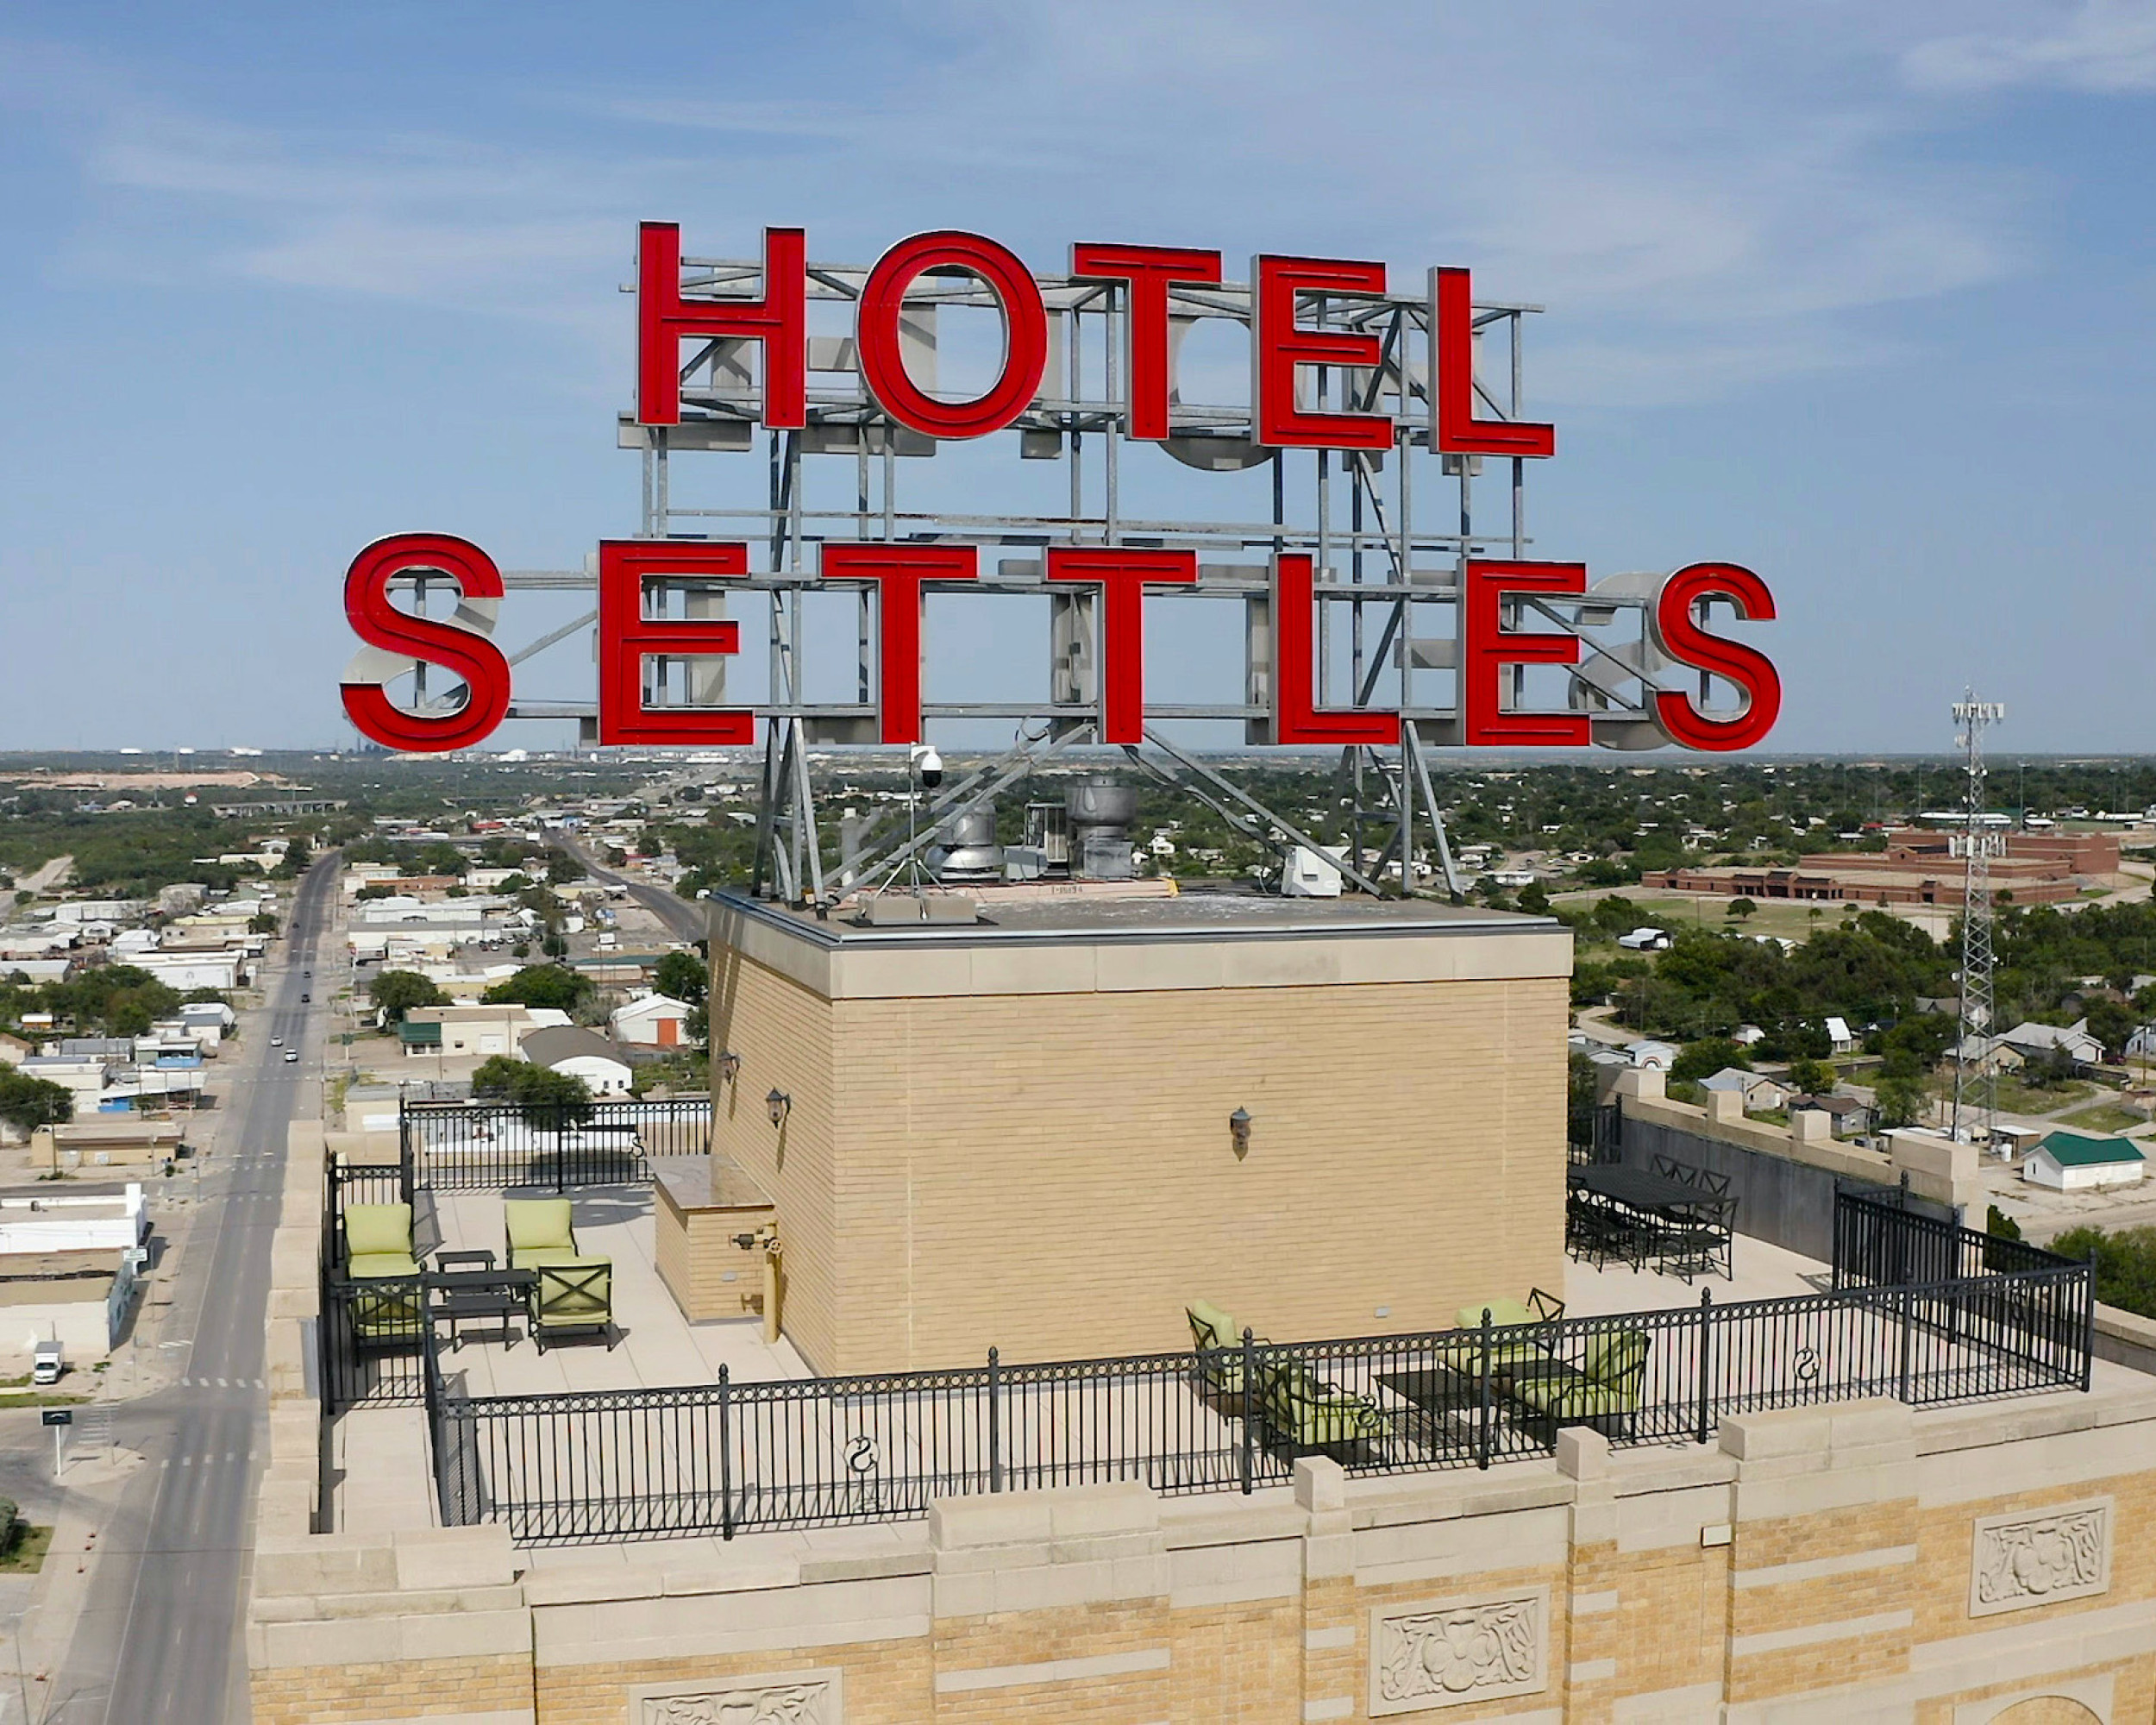 Hotel Settles Sign